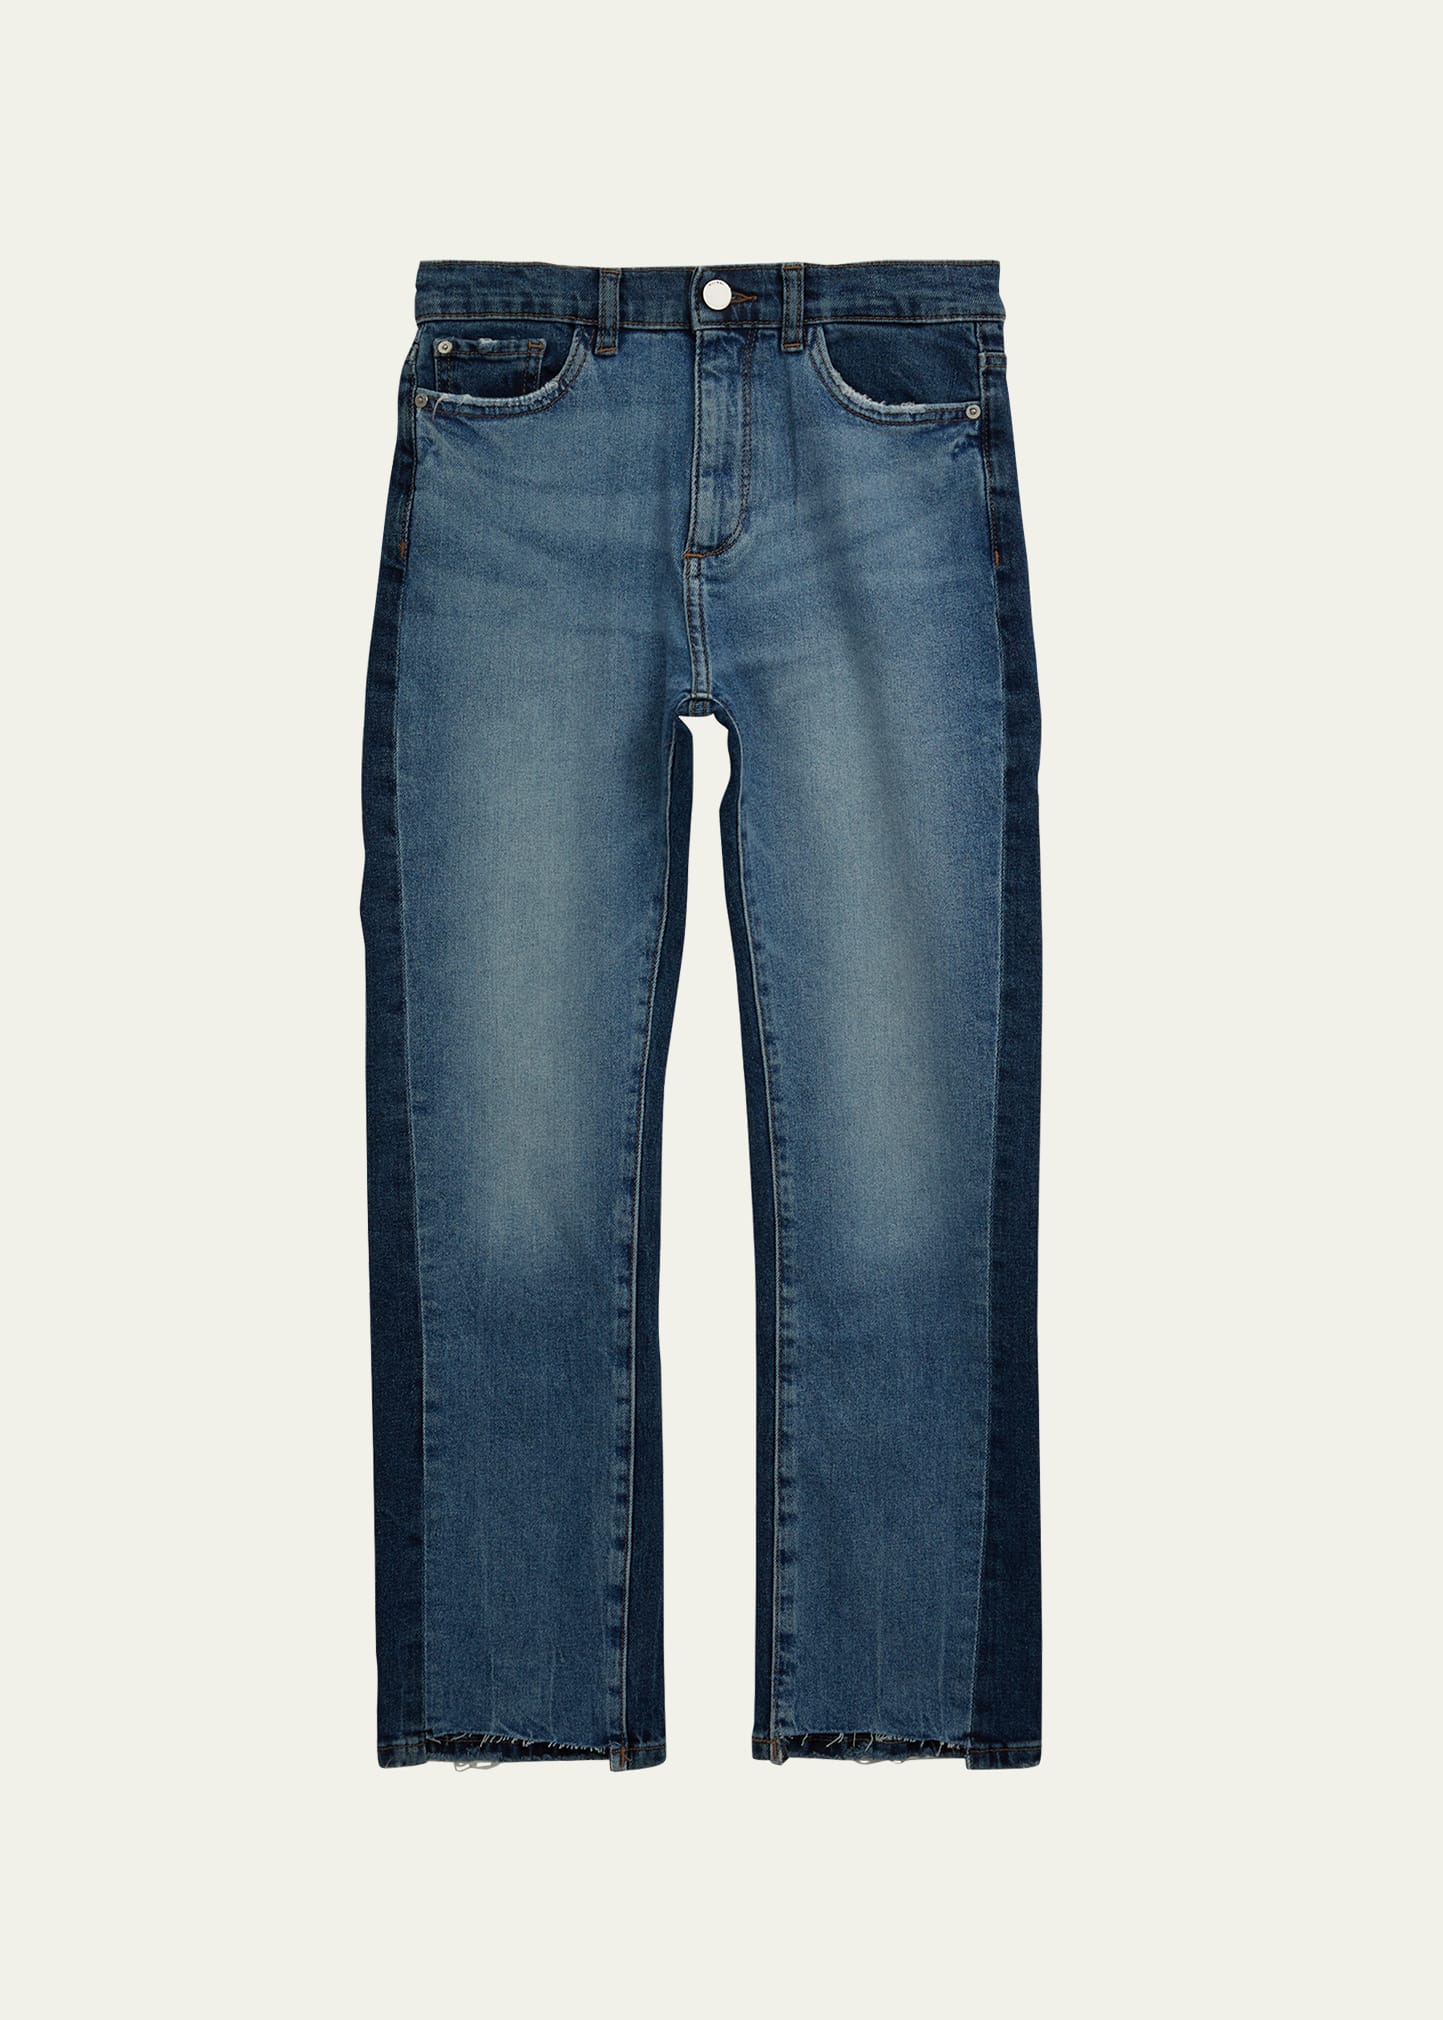 DL Premium Denim Girl's Emie Two-Toned Straight Jeans, Size 7-20